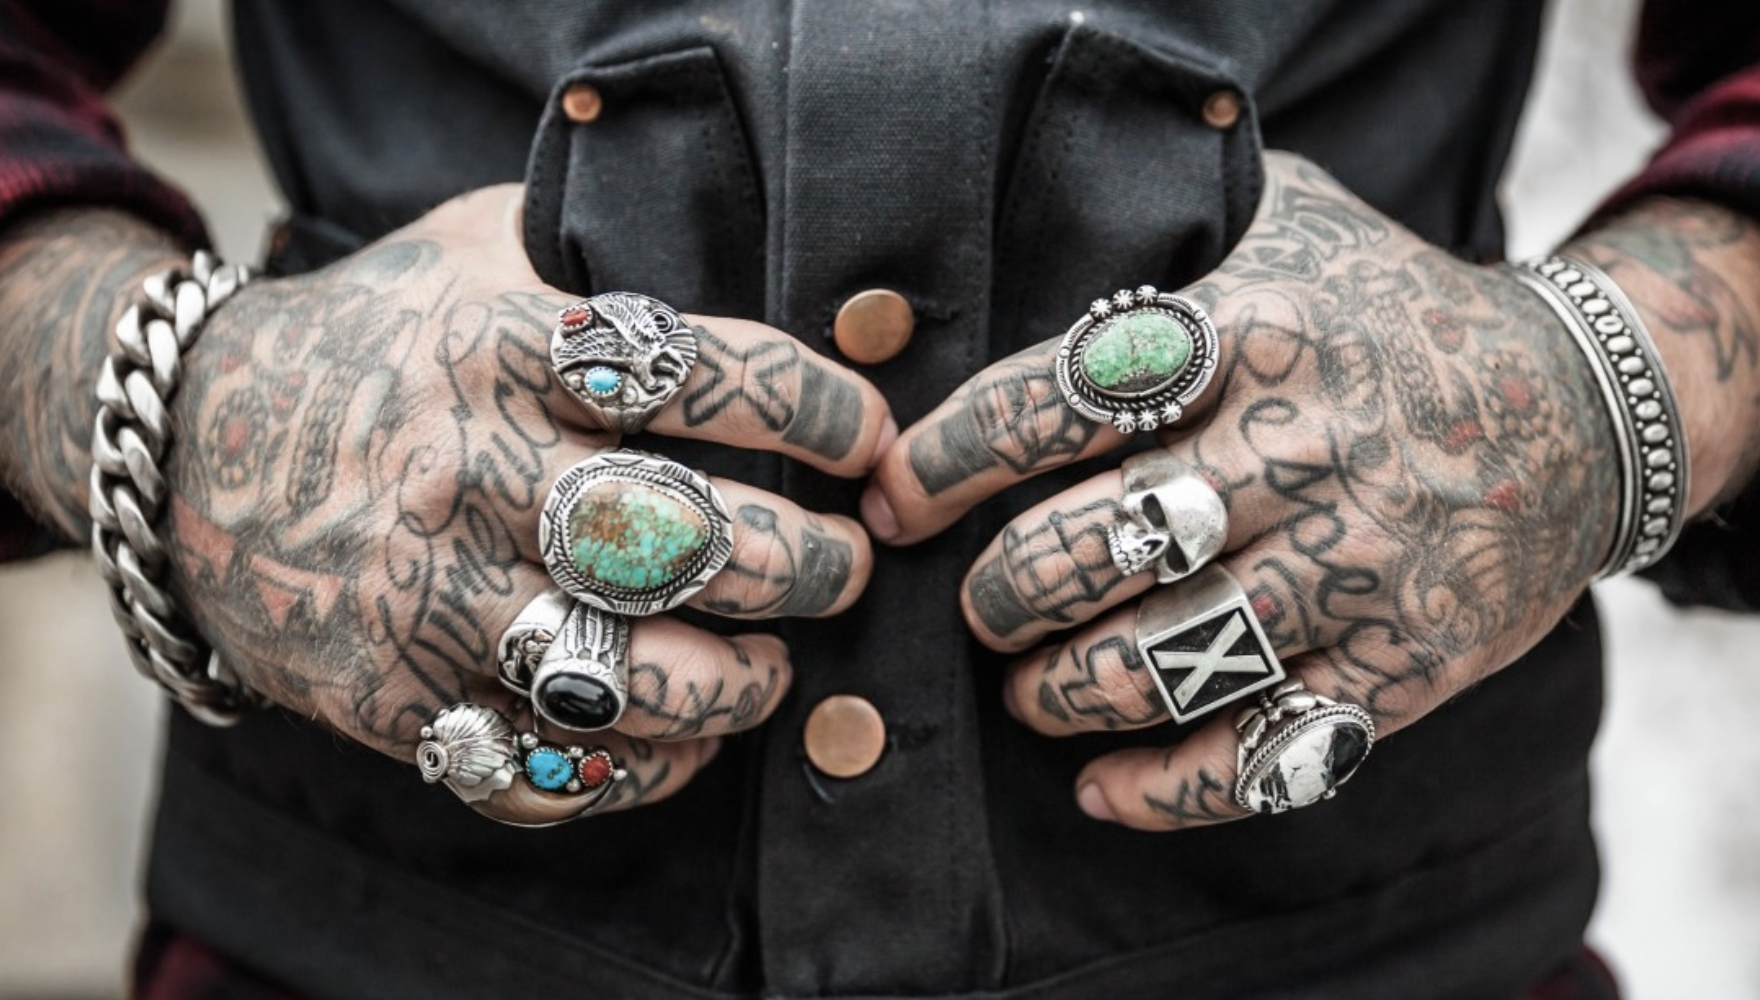 Tattooed hands